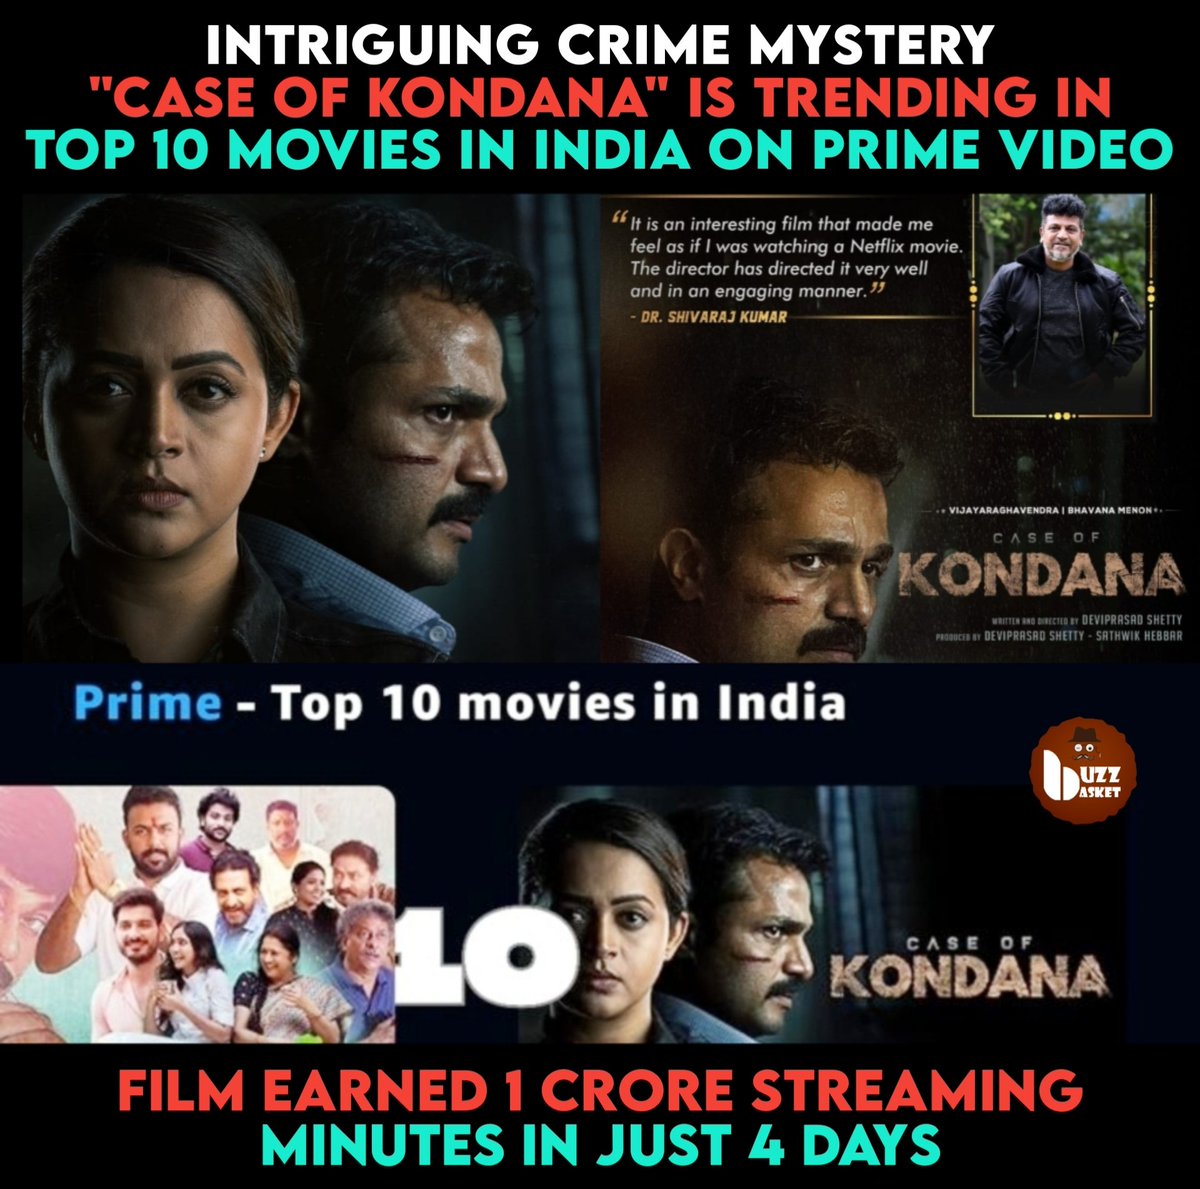 Crime Mystery #CaseofKondana trending in India on #PrimeVideo